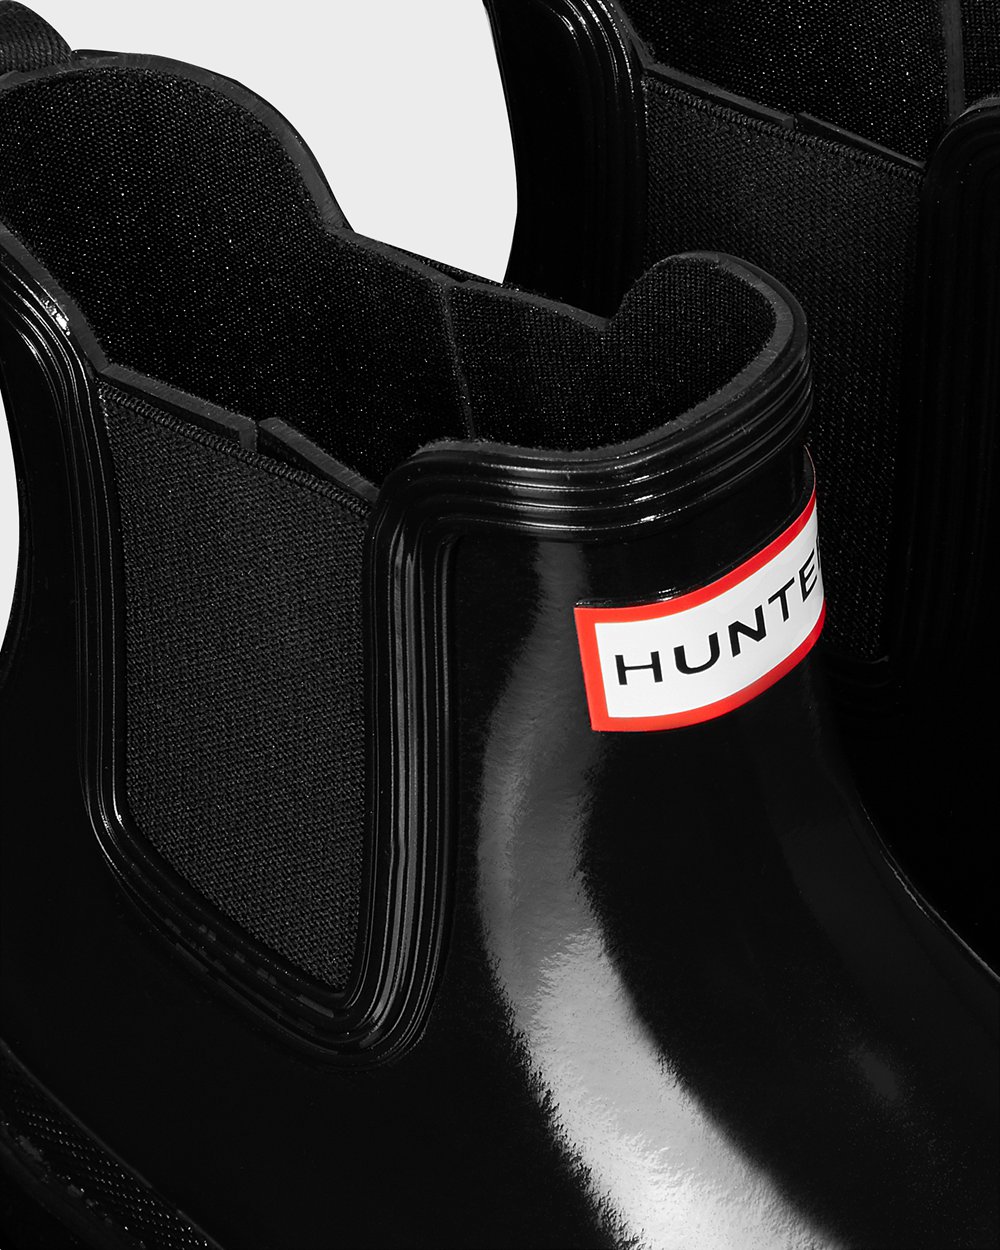 Womens Chelsea Boots - Hunter Original Gloss (63FVEPAUY) - Black